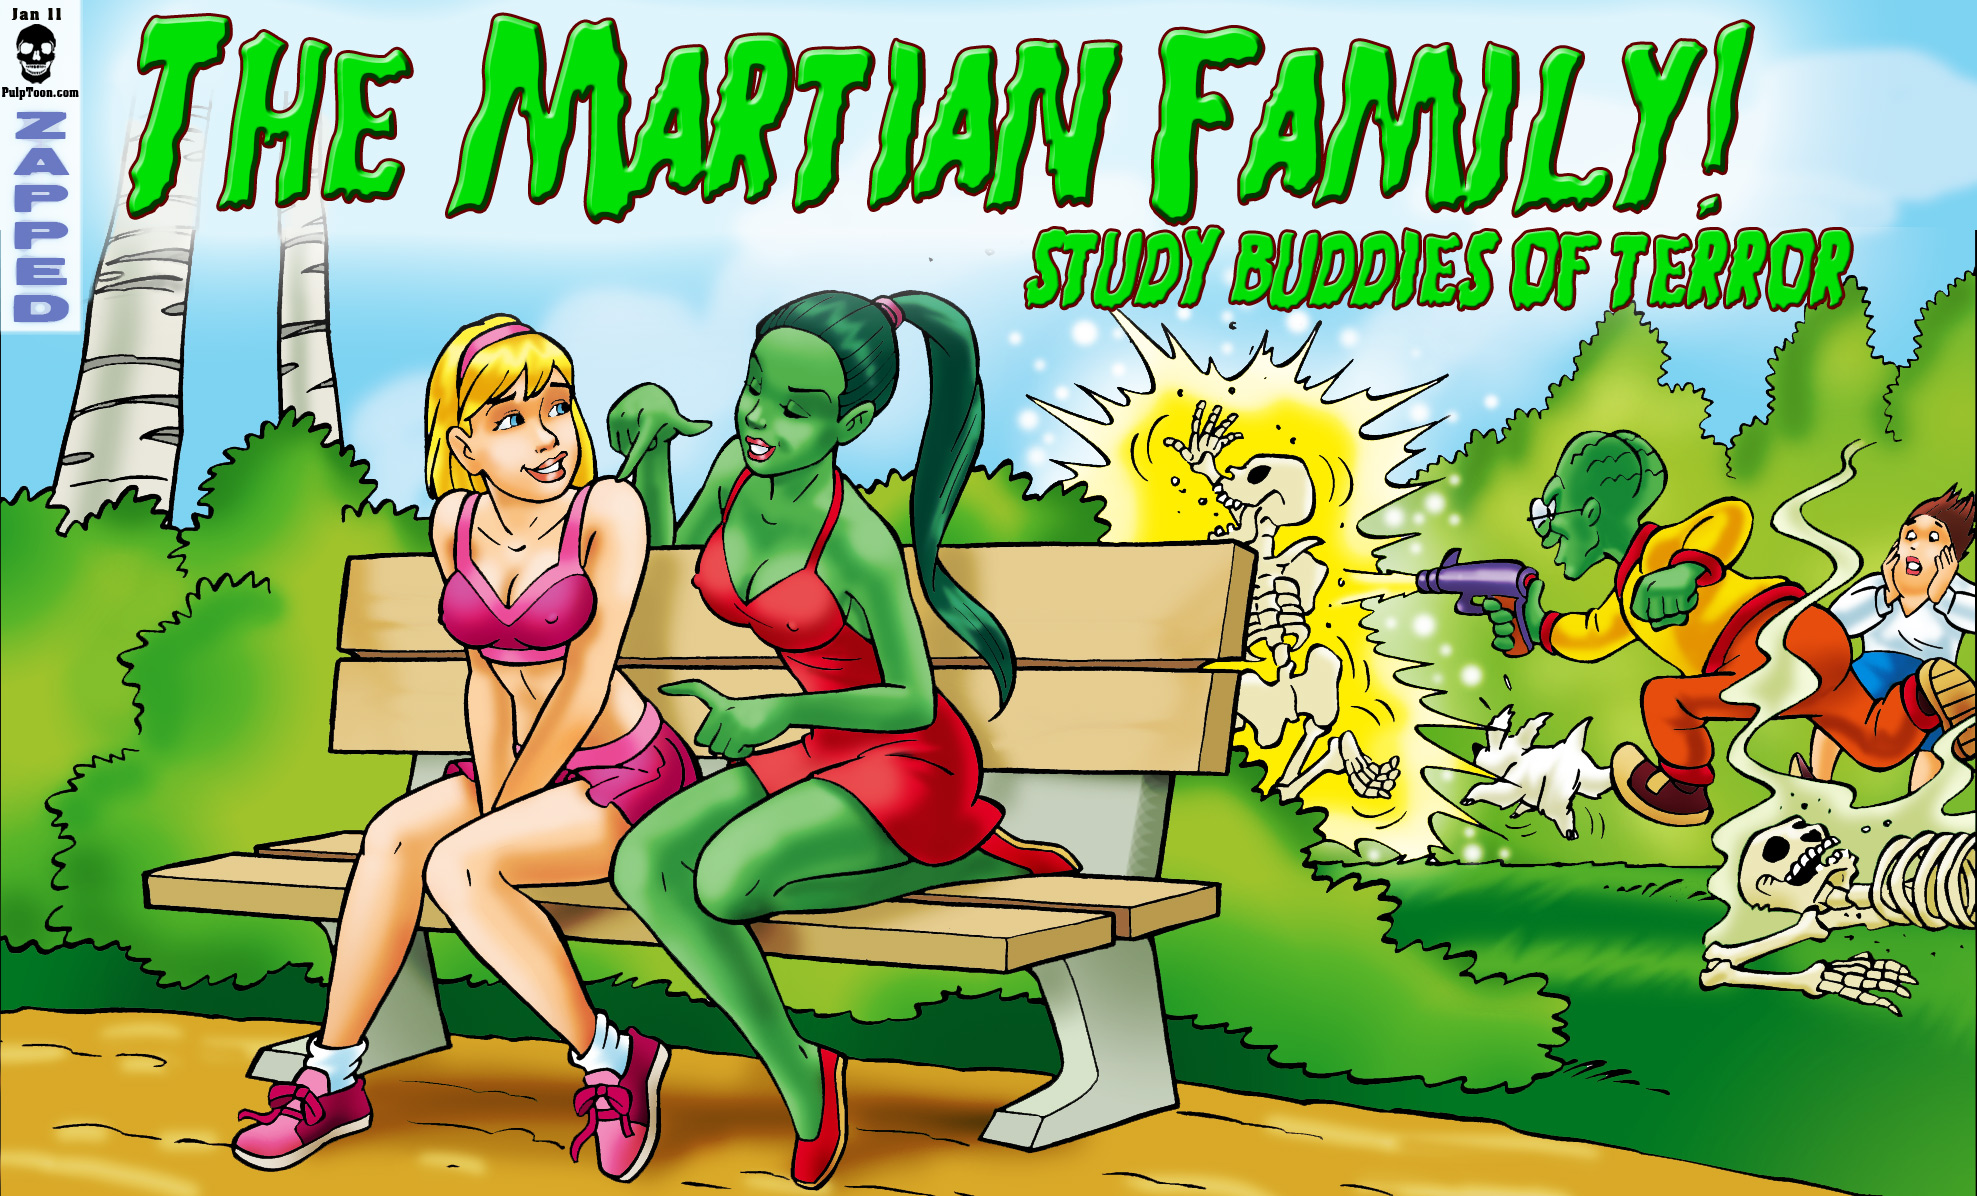 Pulptoon - Thr Martian family - Study Buddies of Terror.